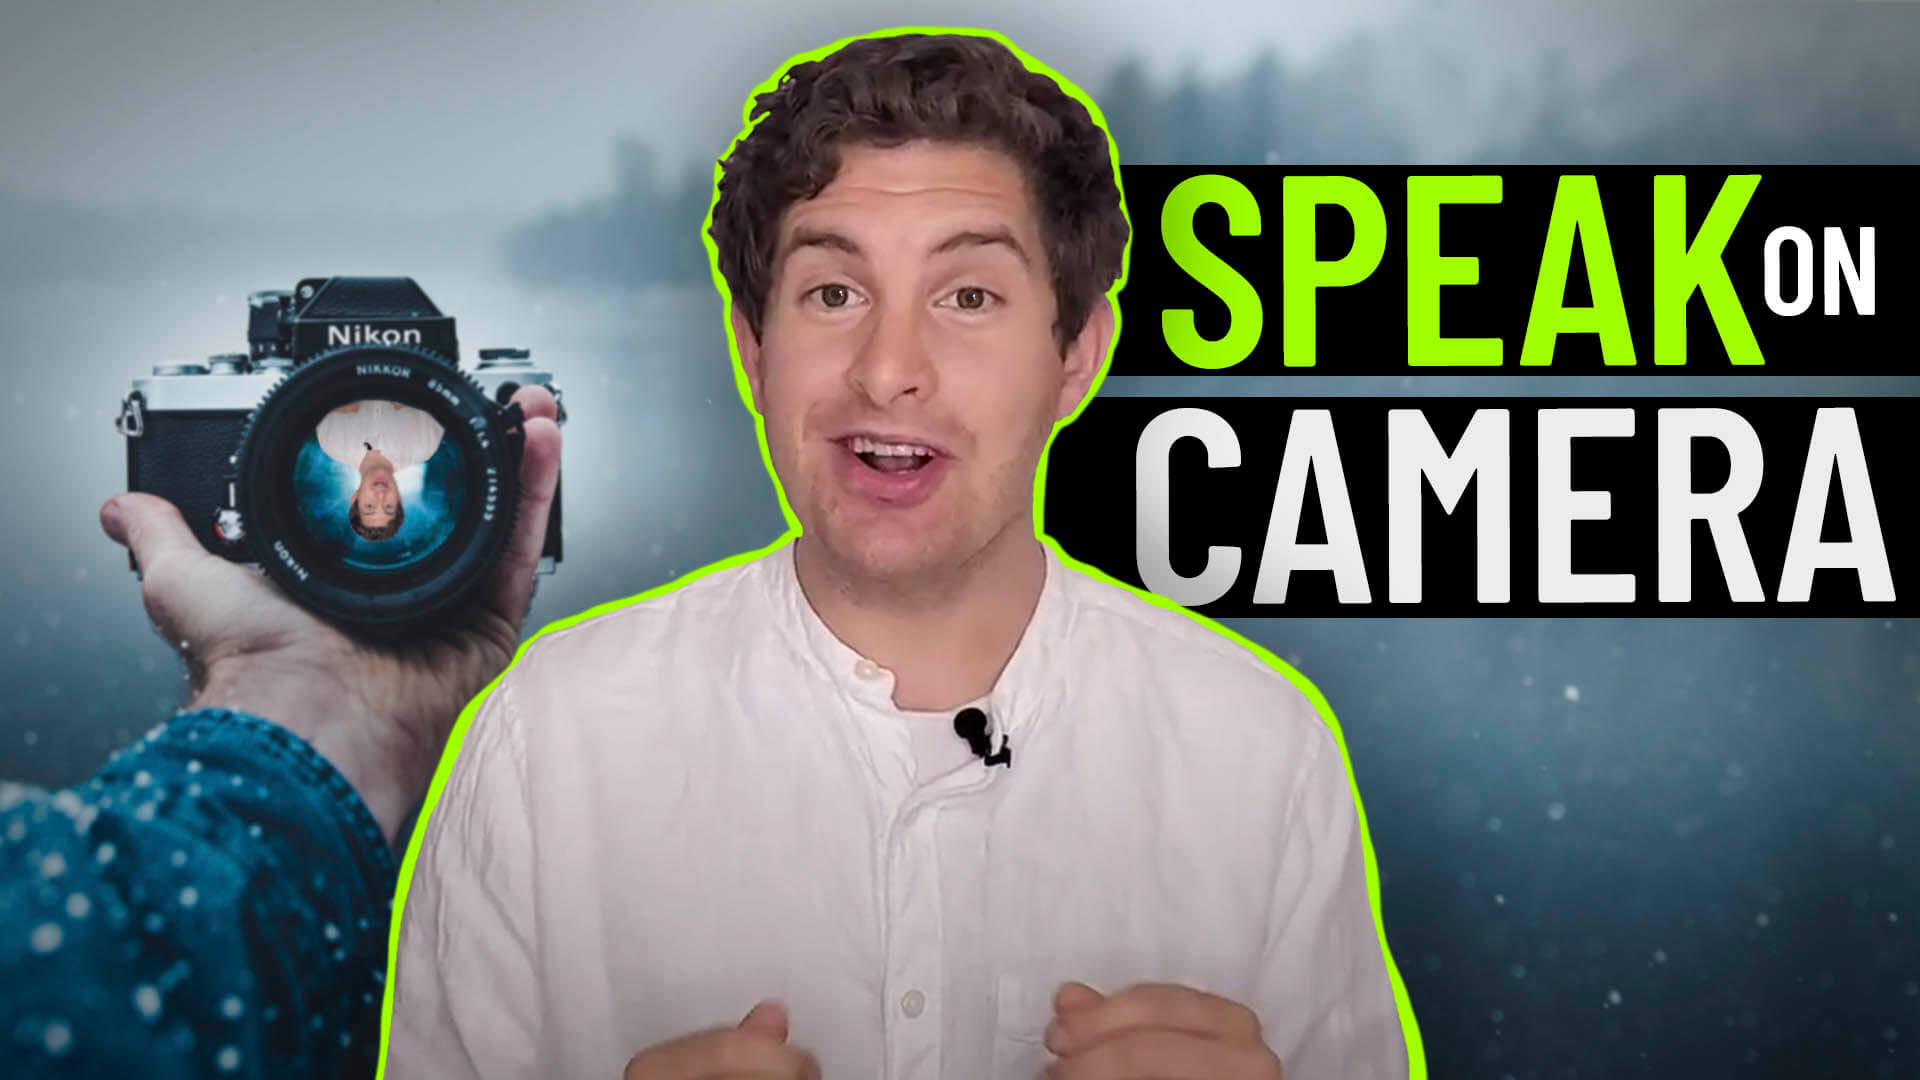 10 tips to speak on camera